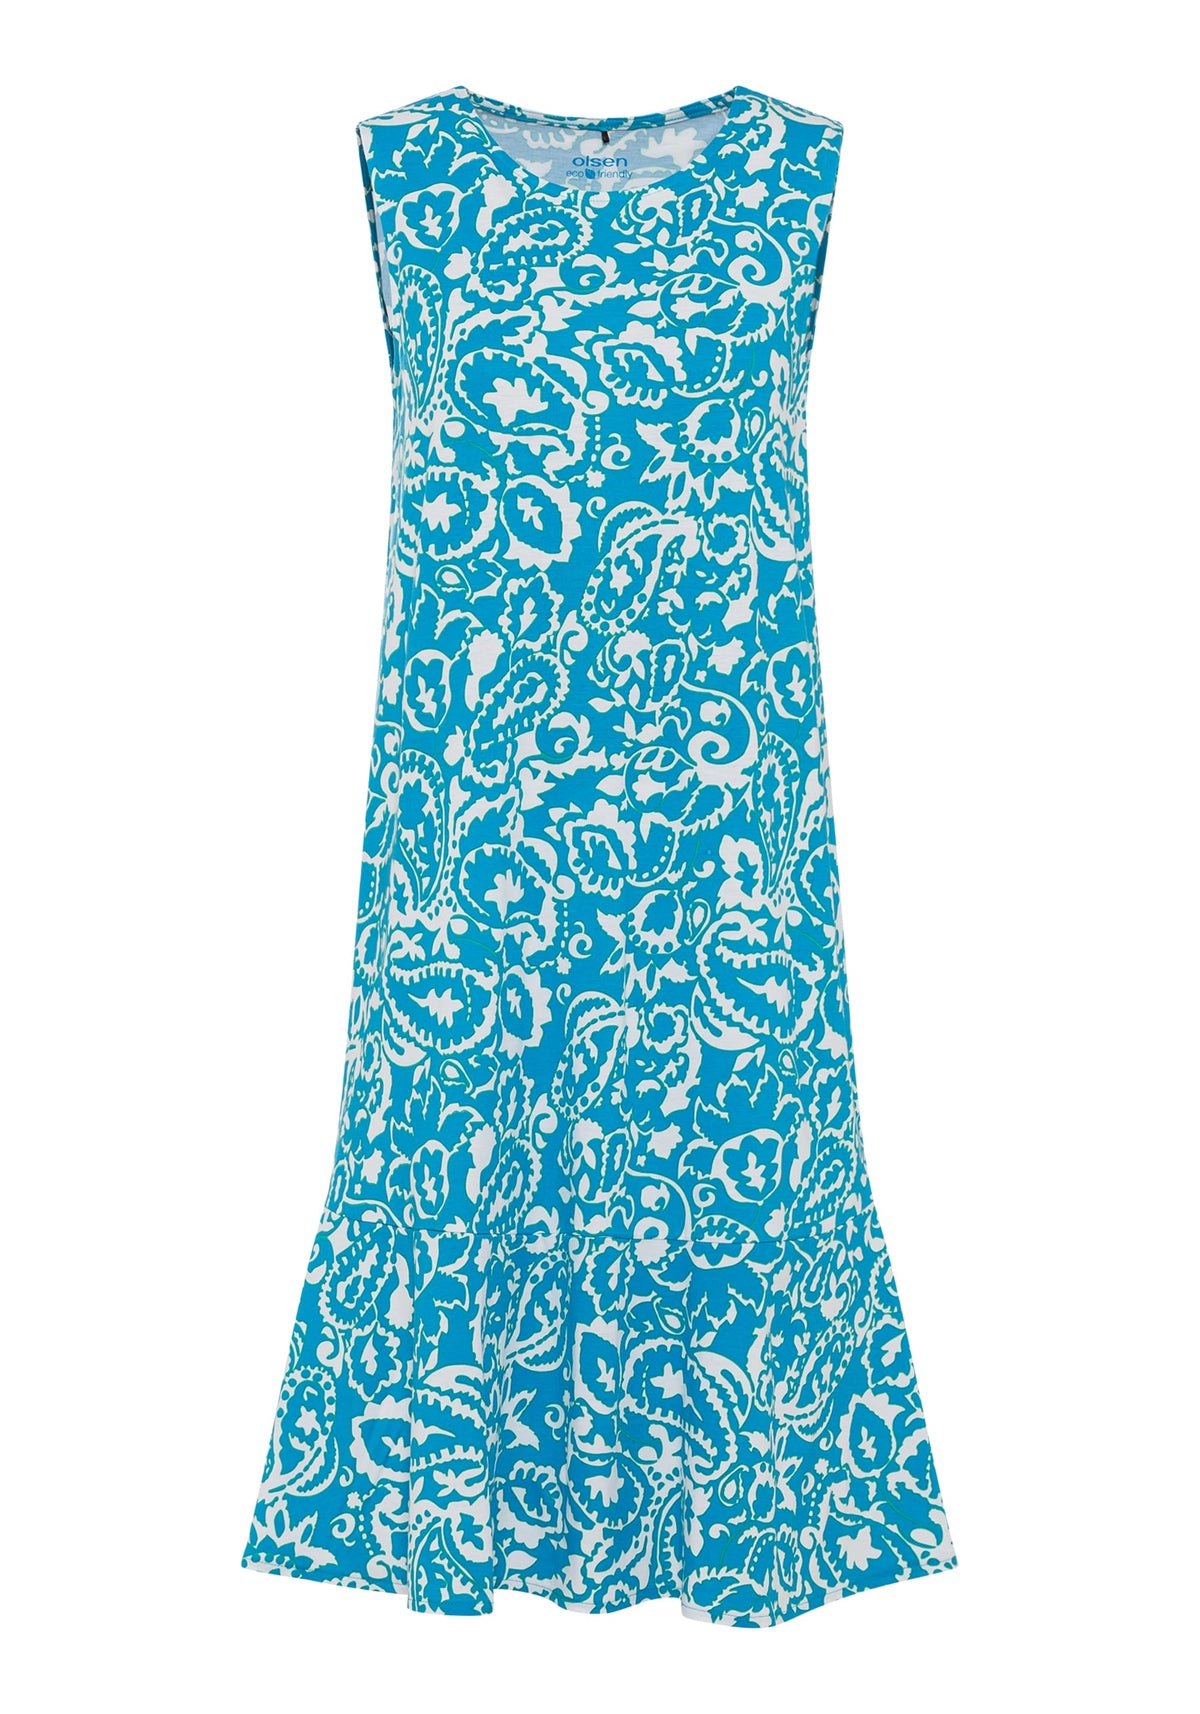 Sleeveless Paisley Print Tiered Dress containing TENCEL™ Modal